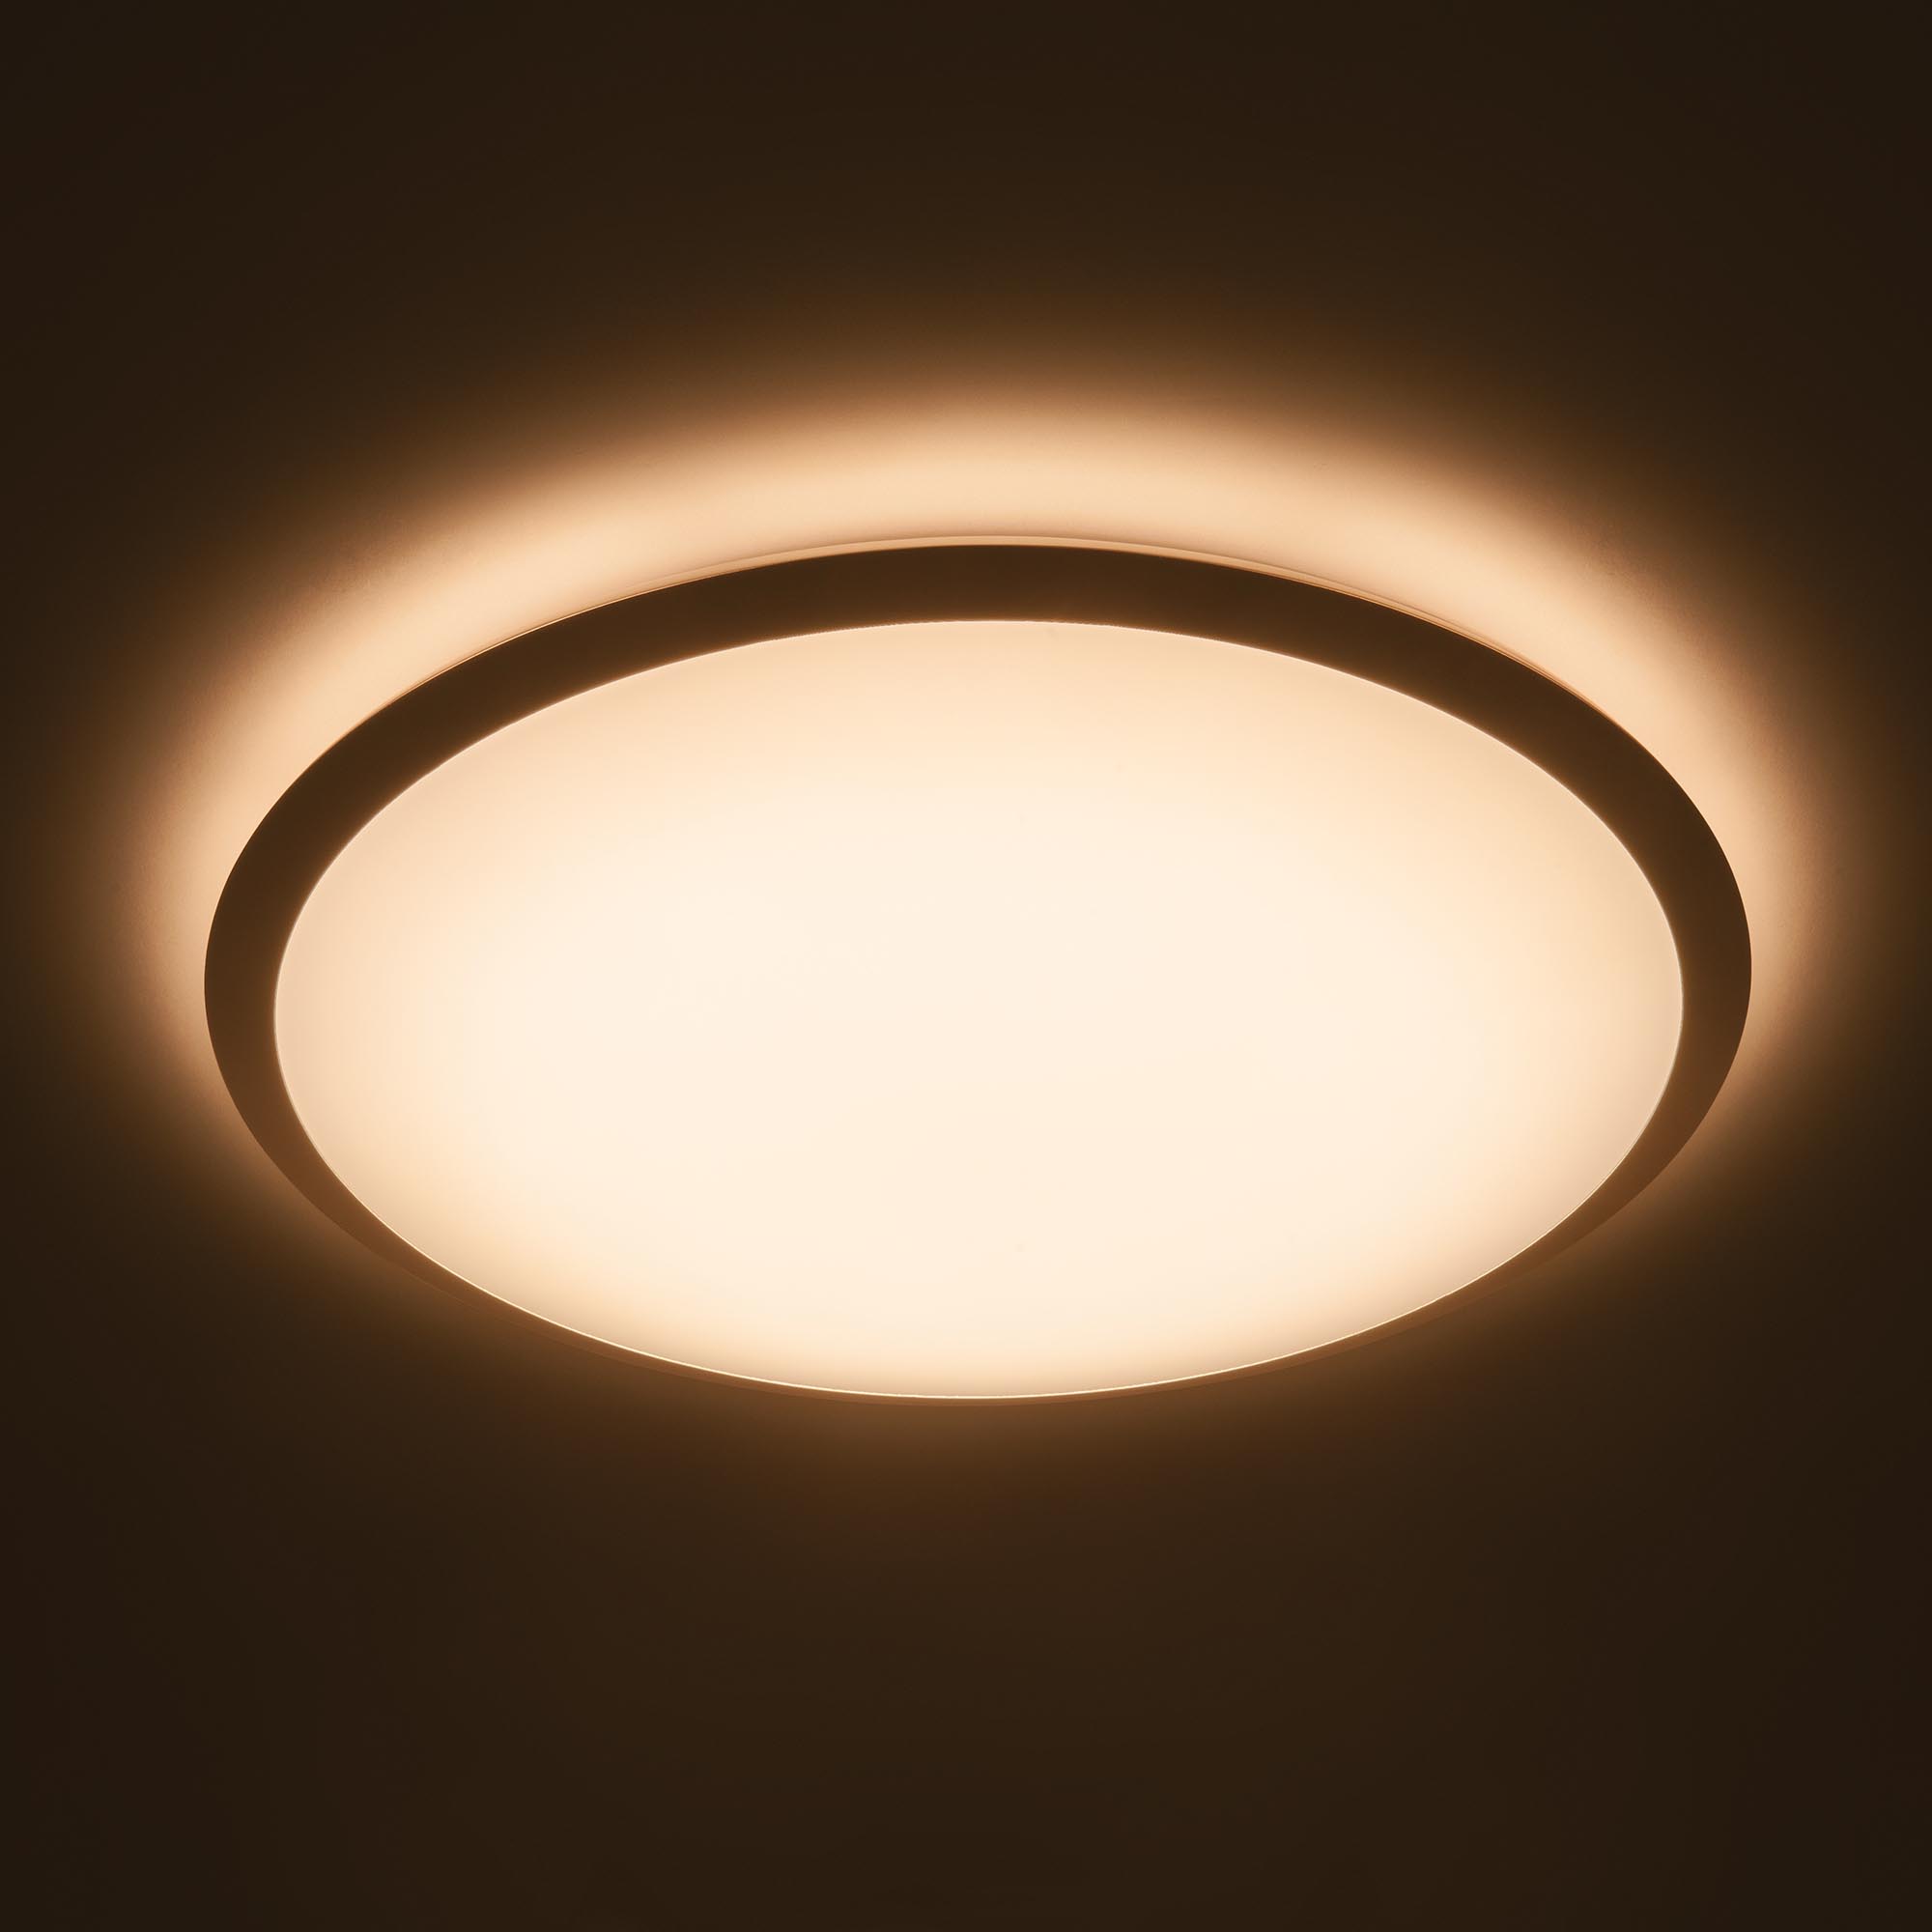 Philips myLiving LED ceiling light Wawel white 38cm 2000lm 20W